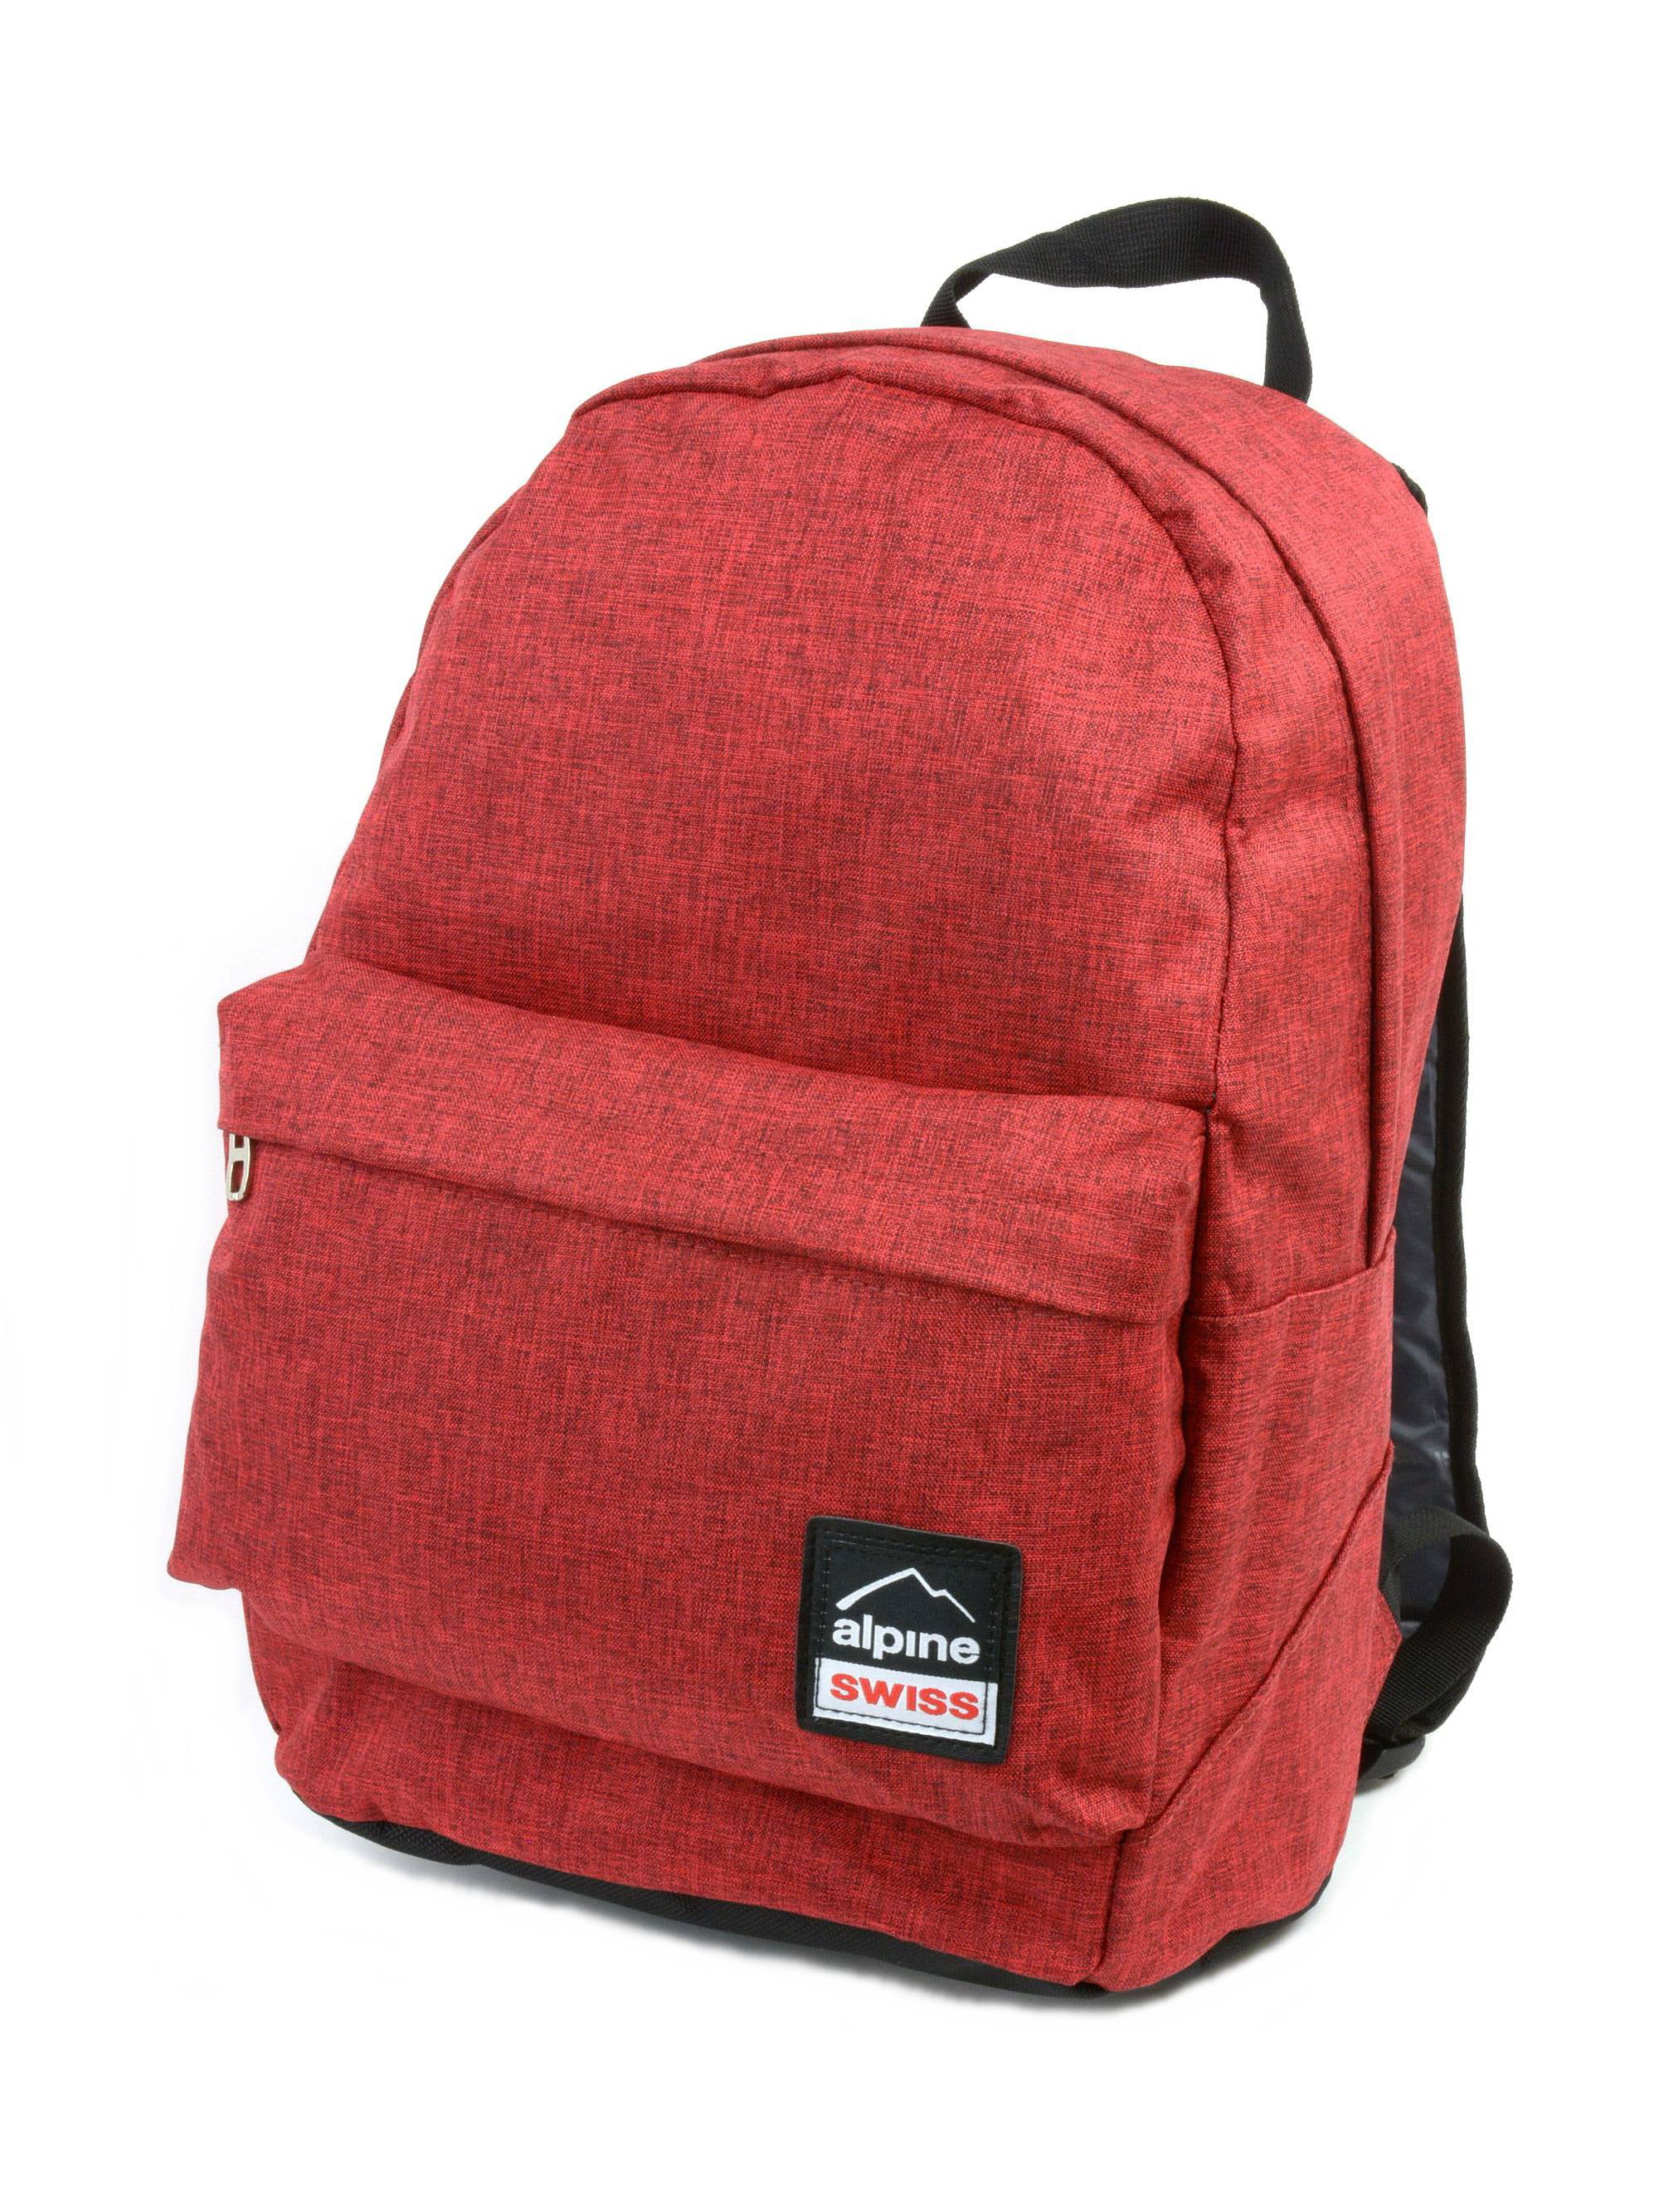 Alpine Swiss Major Back Pack Bookbag School Bag Daypack 1 Year Warranty Backpack 